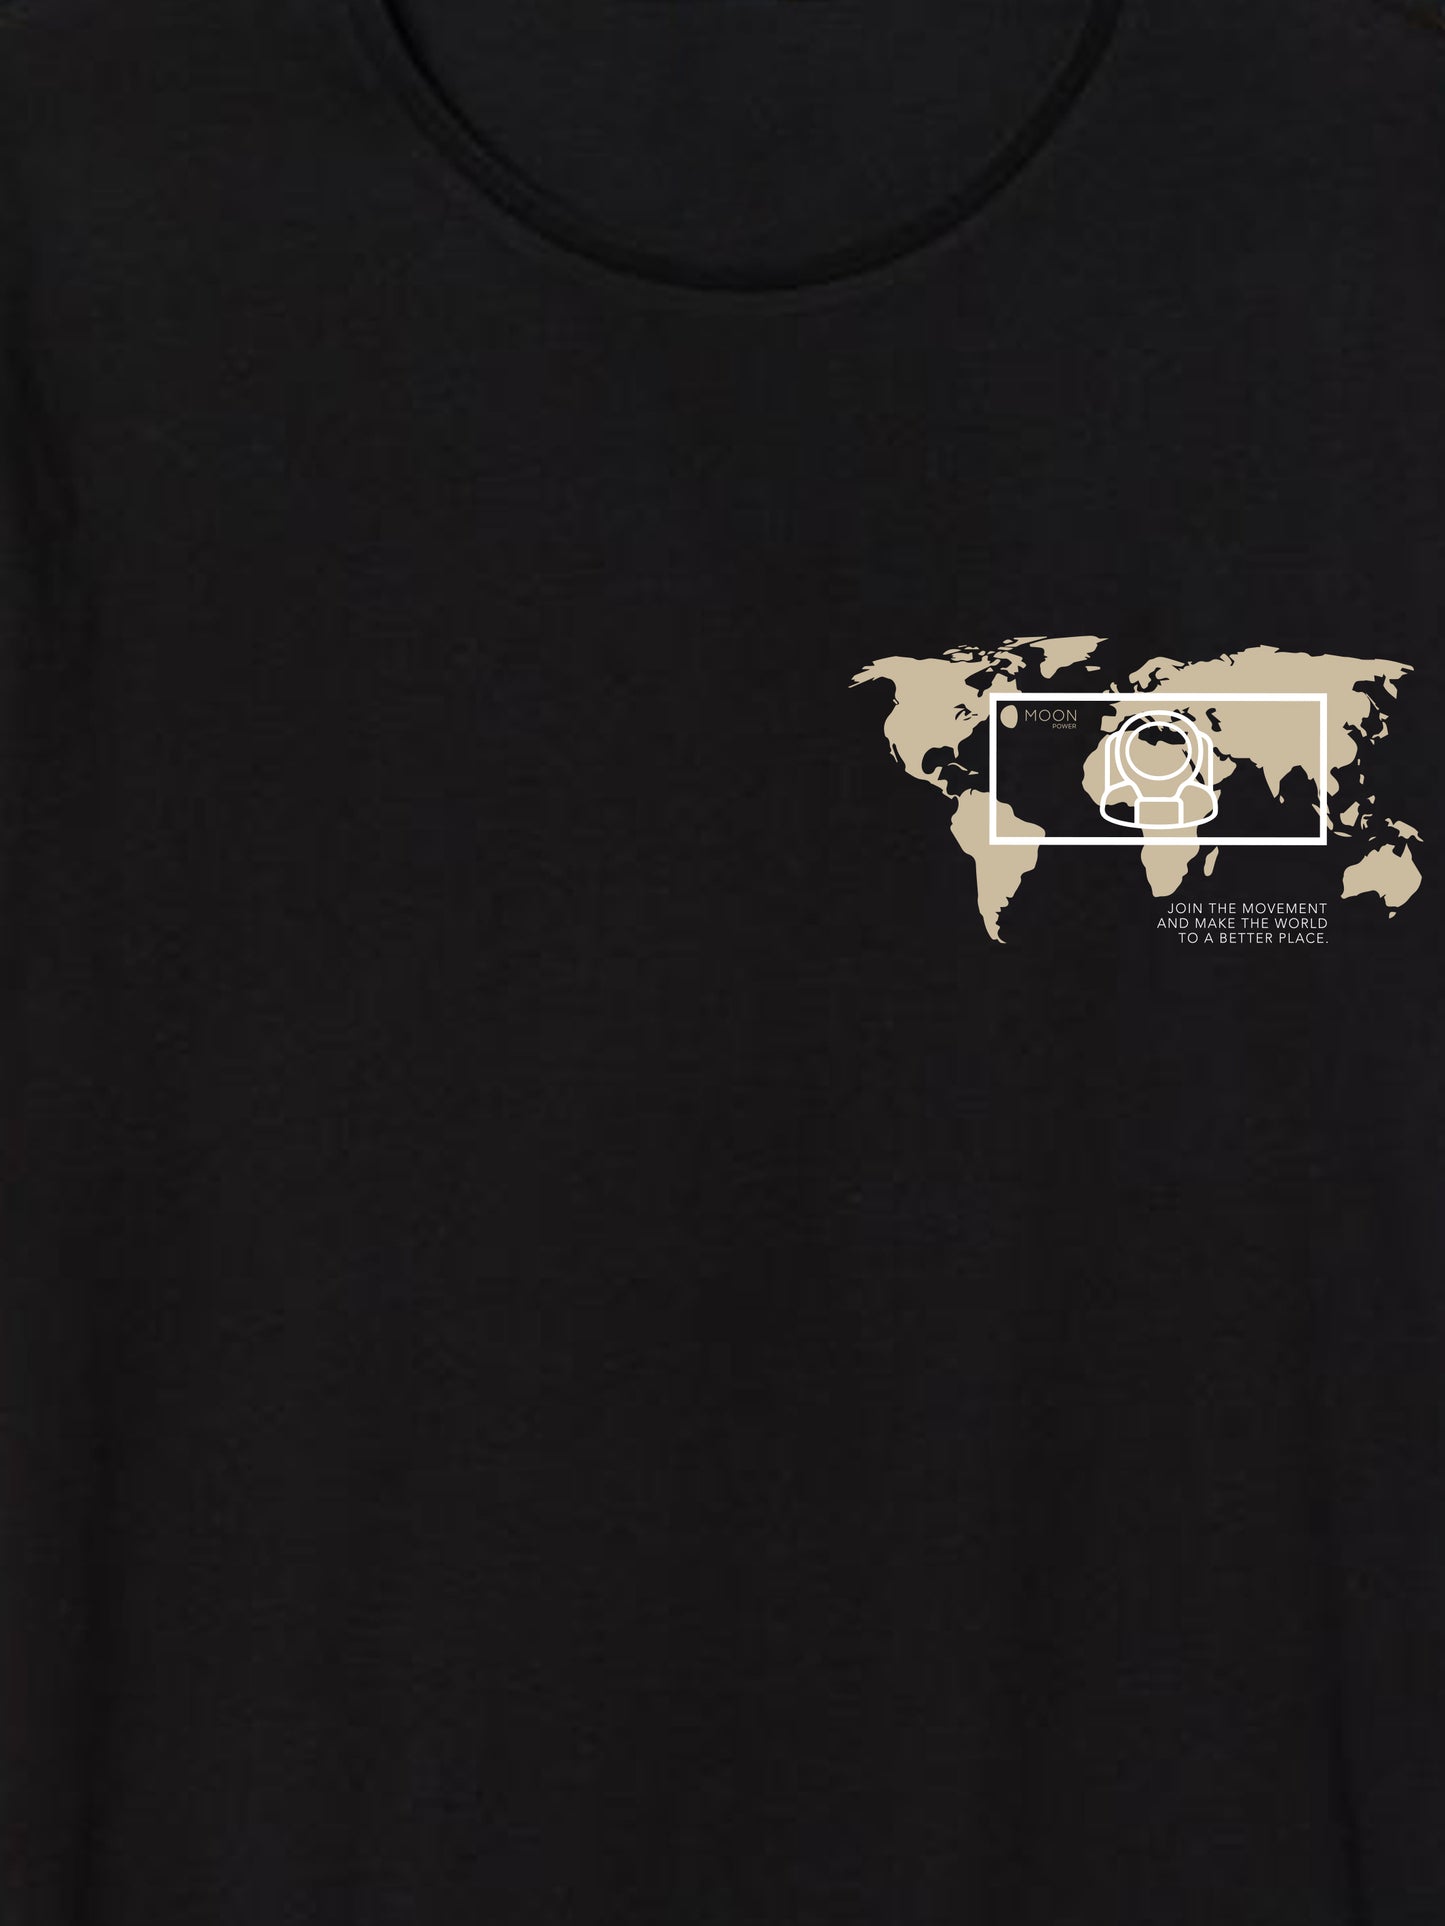 Herren T-Shirt ASTRONAUT (schwarz)